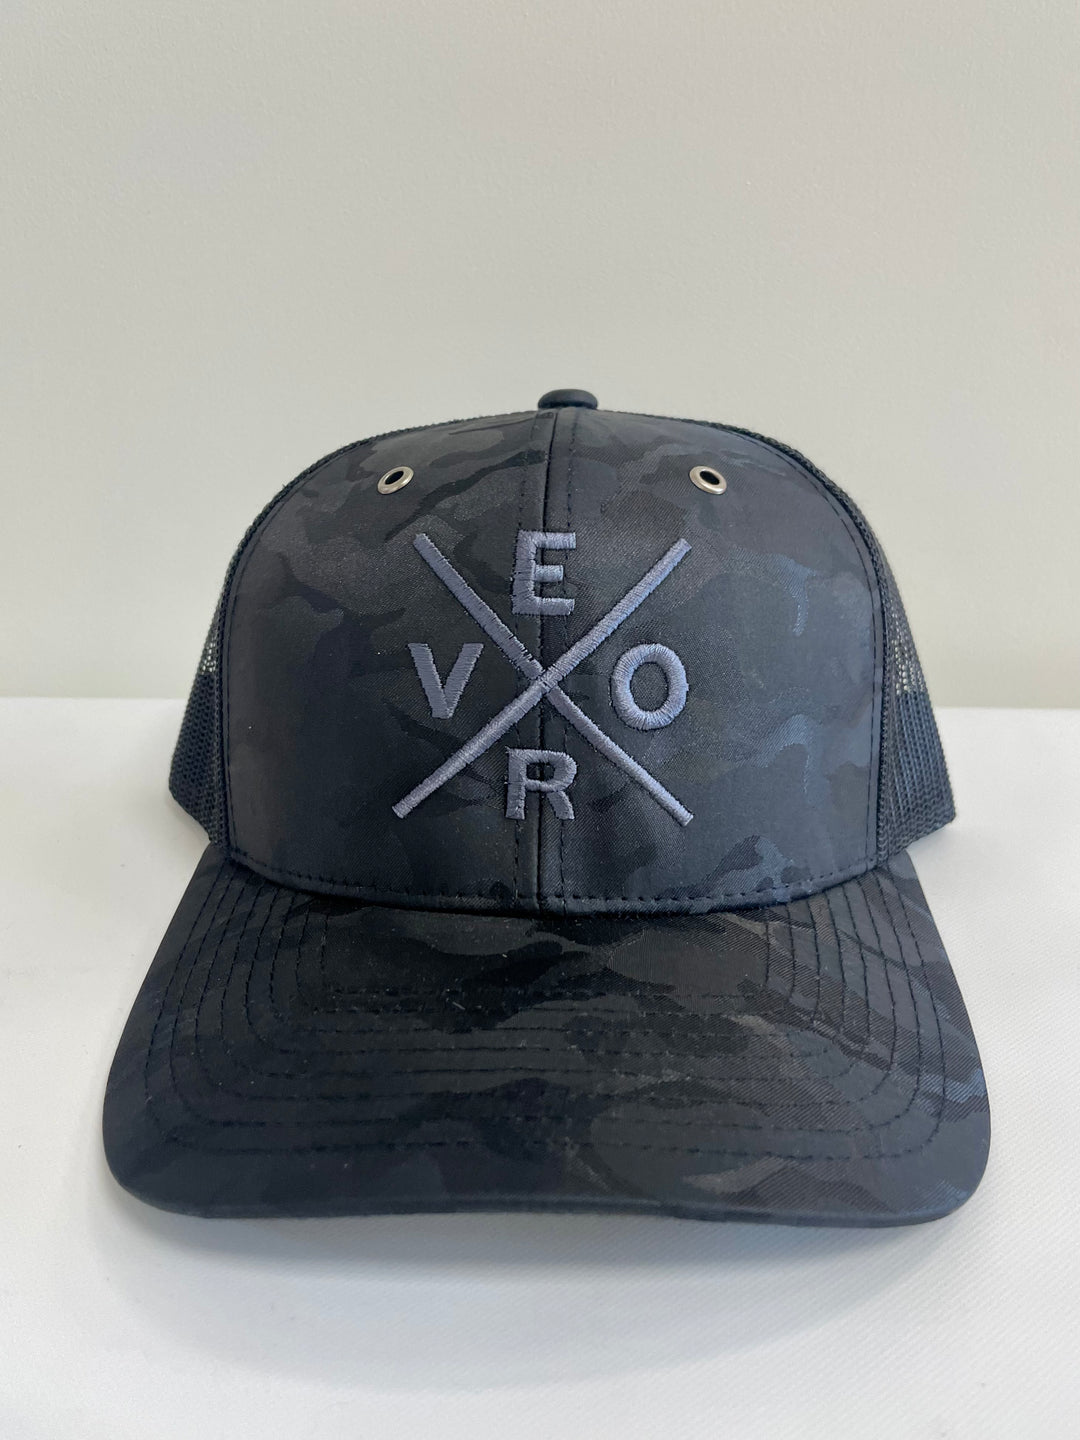 Vero Trucker Hat - Black Camo